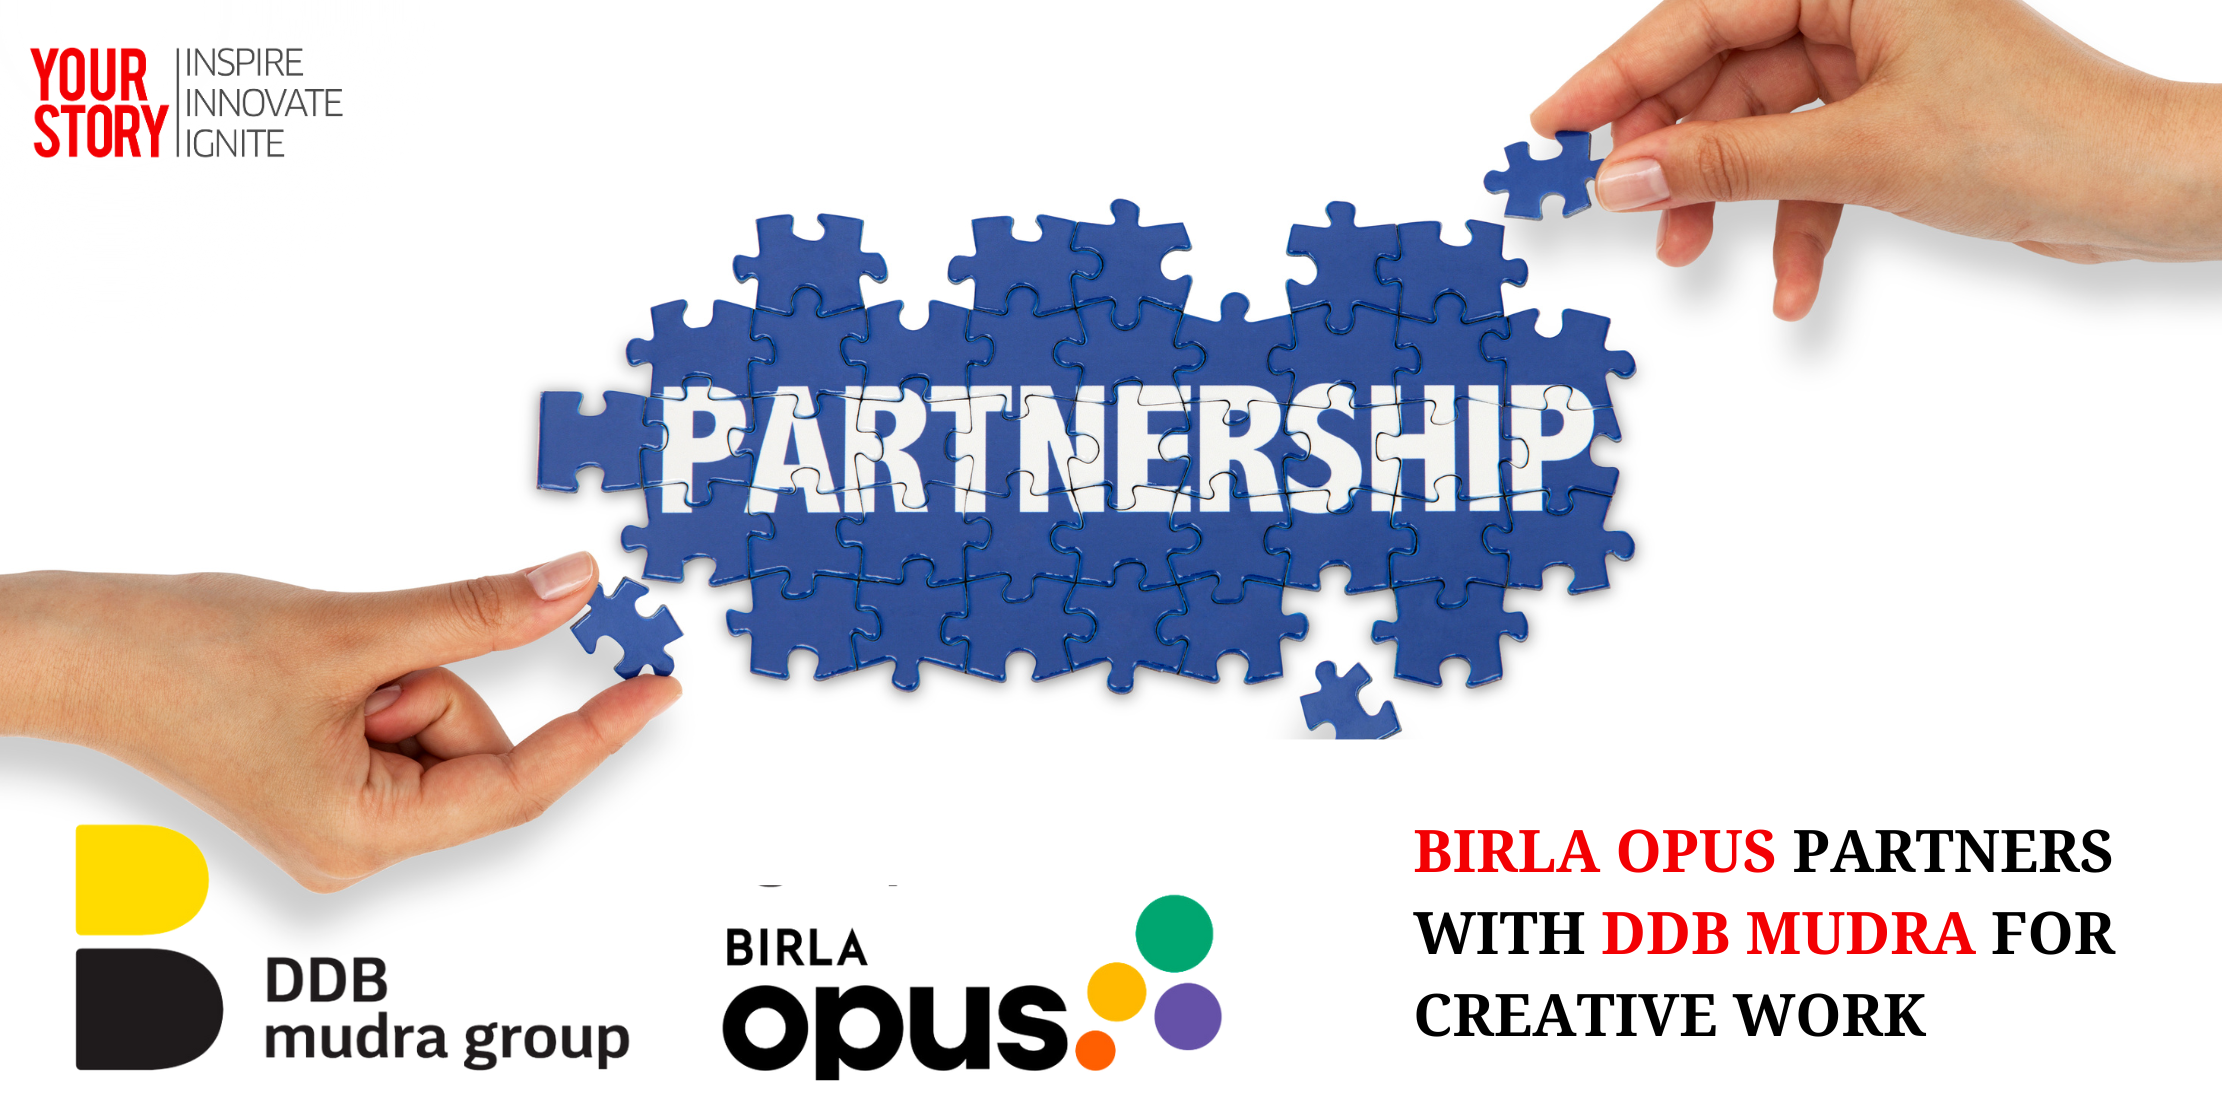 Birla Opus and DDB Mudra Team Up to Paint the World Vibrant through Creative Partnership